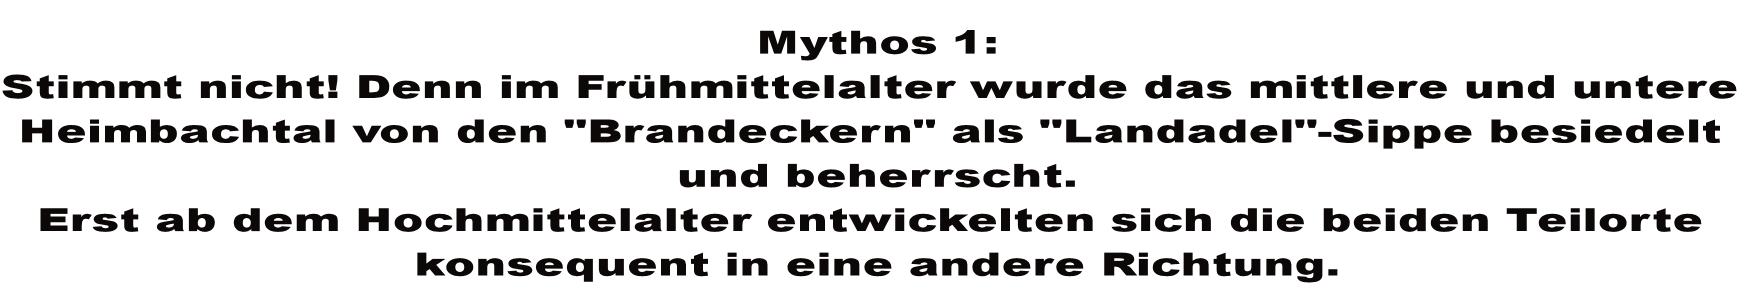 Mythos11